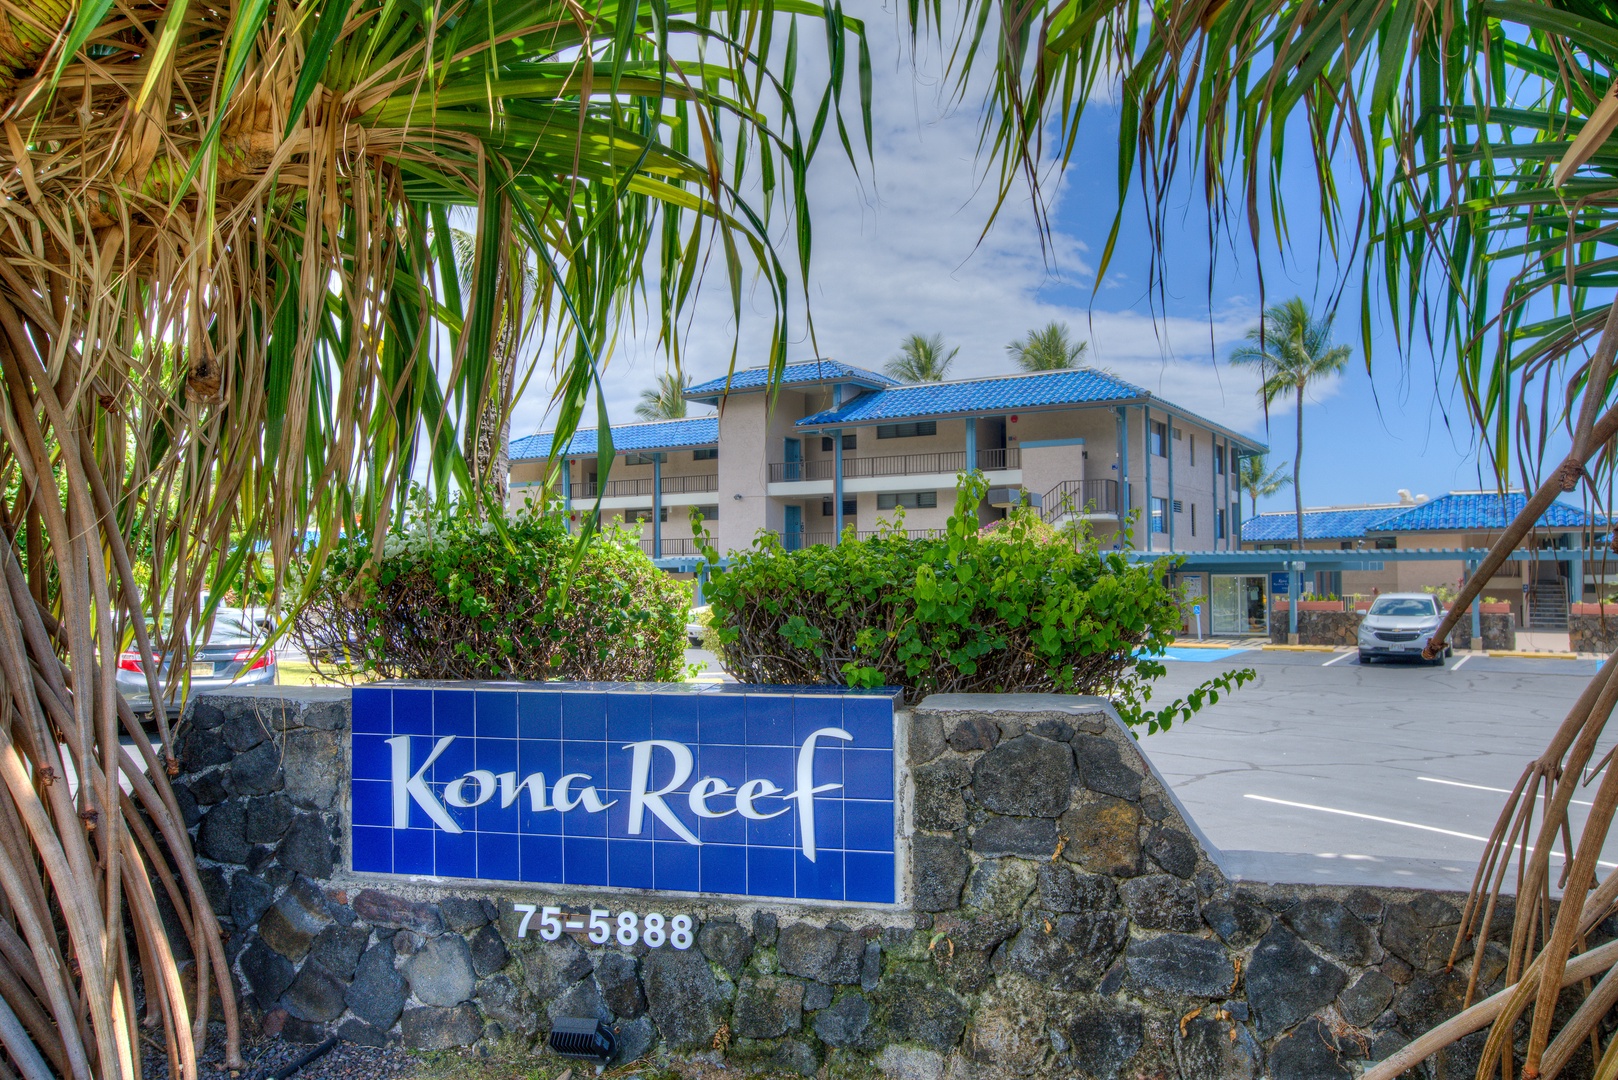 Kailua Kona Vacation Rentals, Kona Reef F11 - KONA REEF- Oceanfront Complex within Walking Distance of Town.